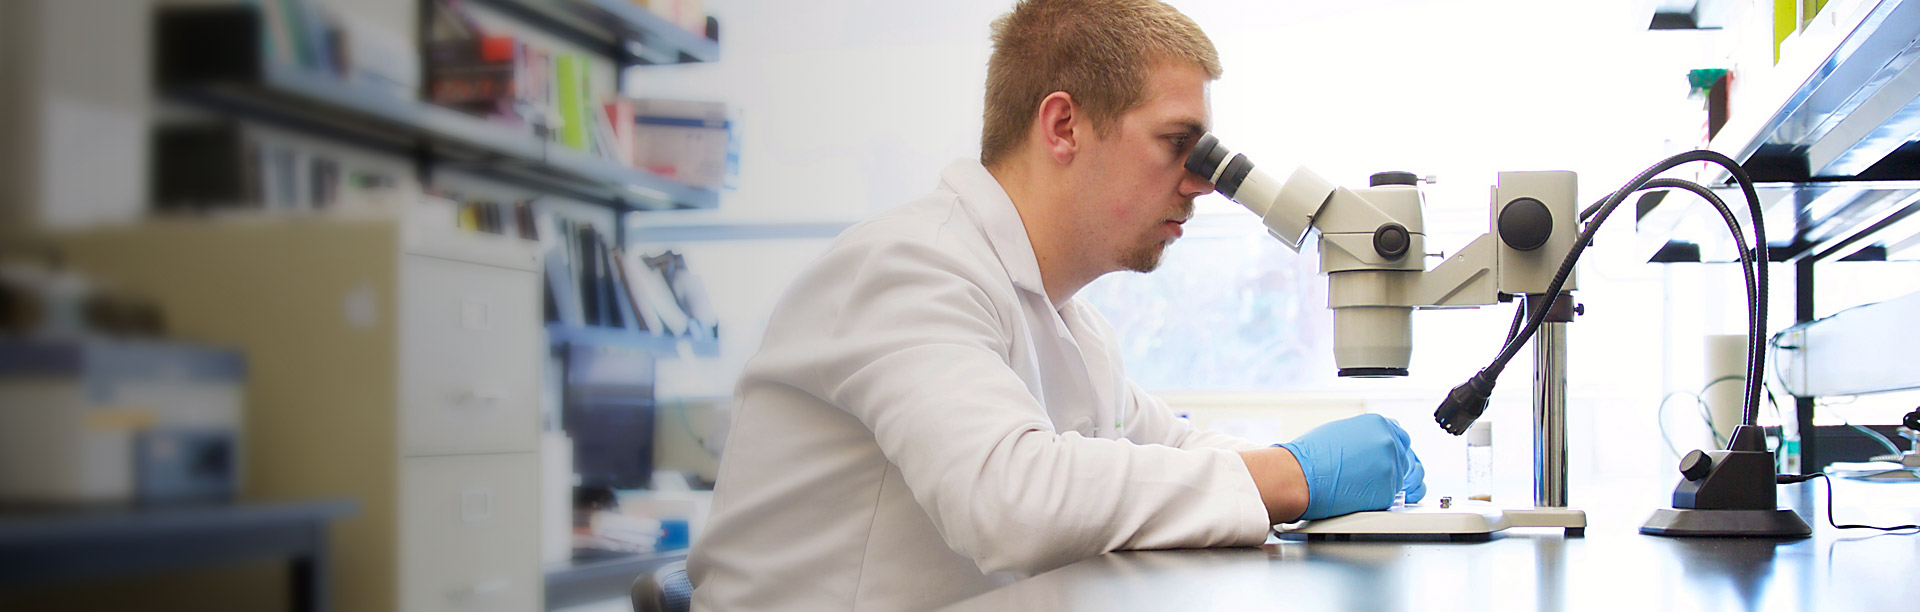 UBCO Okanagan Biology Graduate Student looking through a microscope in Lab